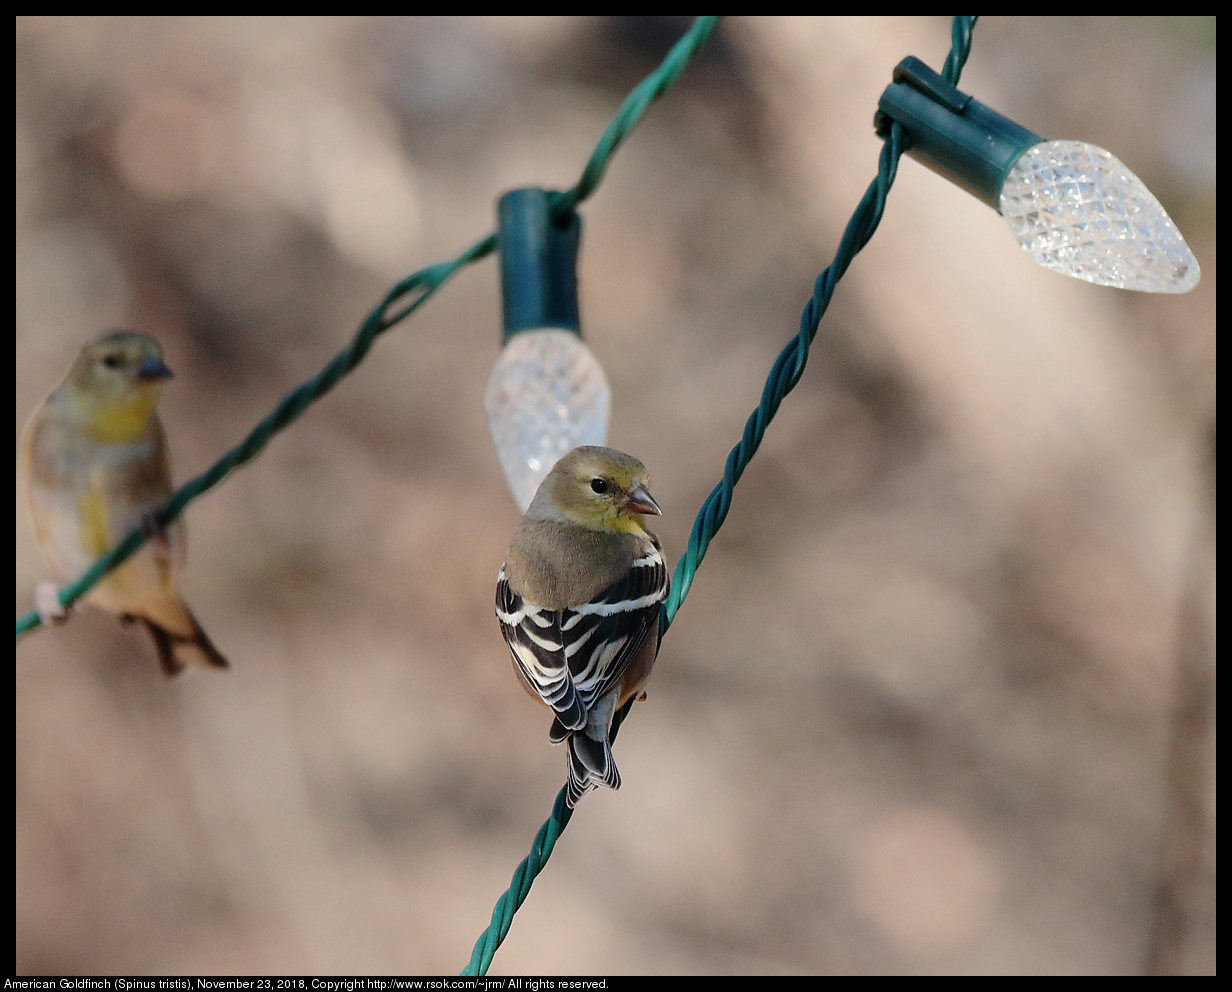 American Goldfinch (Spinus tristis), November 23, 2018